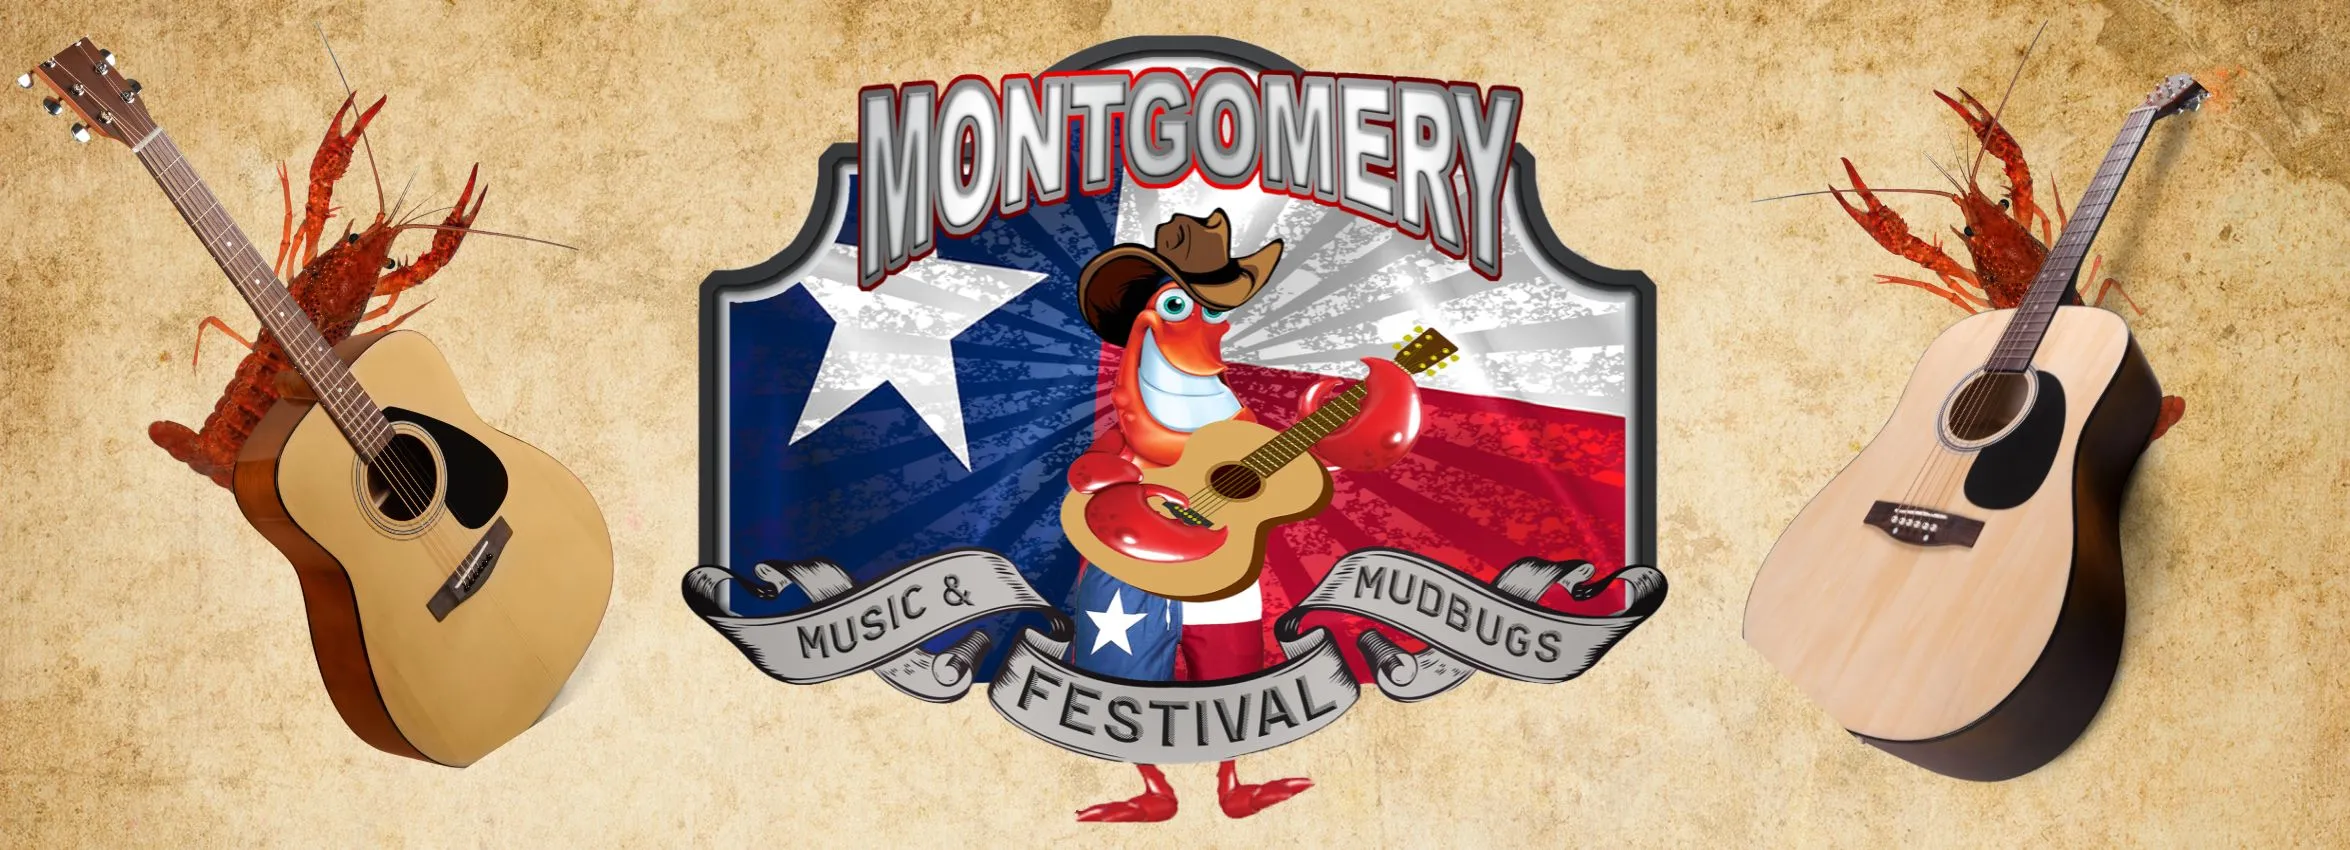 Montgomery-Co-Music-_-Mudbug-Festival_Desktop_ET